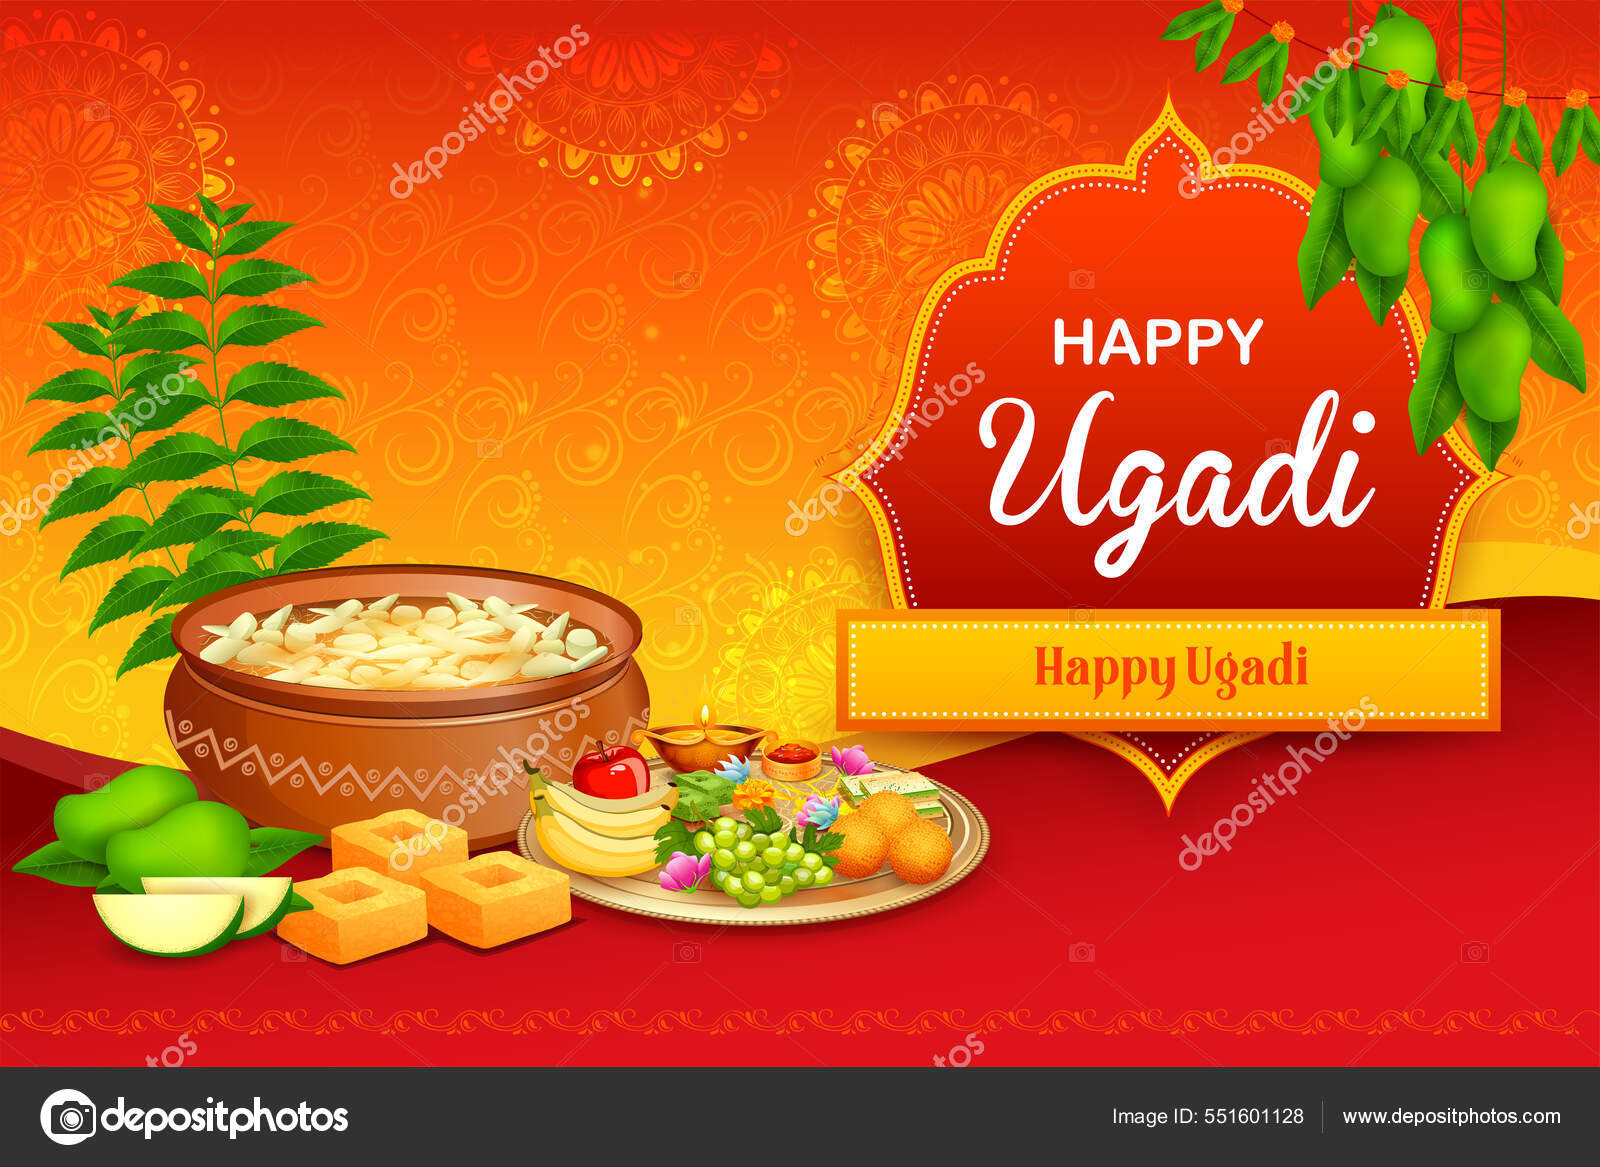 Kannada new year Vector Art Stock Images | Depositphotos